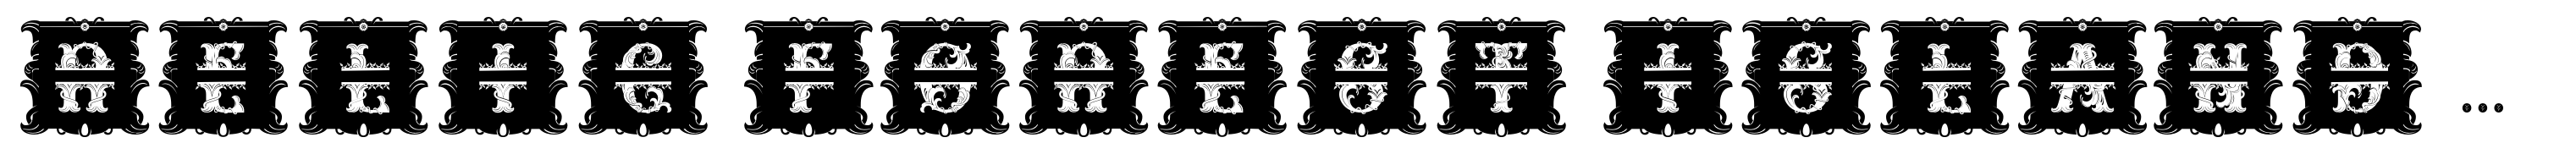 Relic Forest Island 3 Monogram frame black